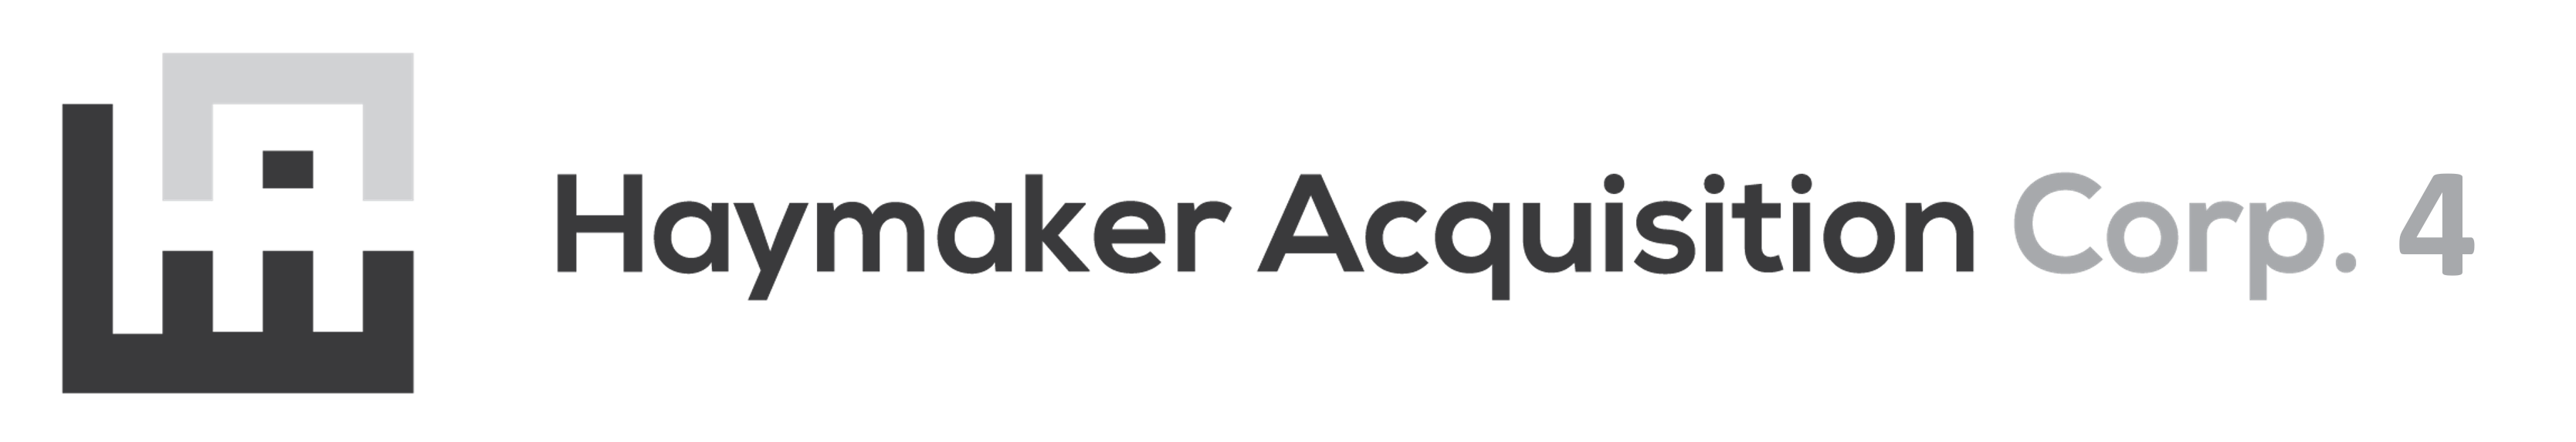 Haymaker Acquisition Corp